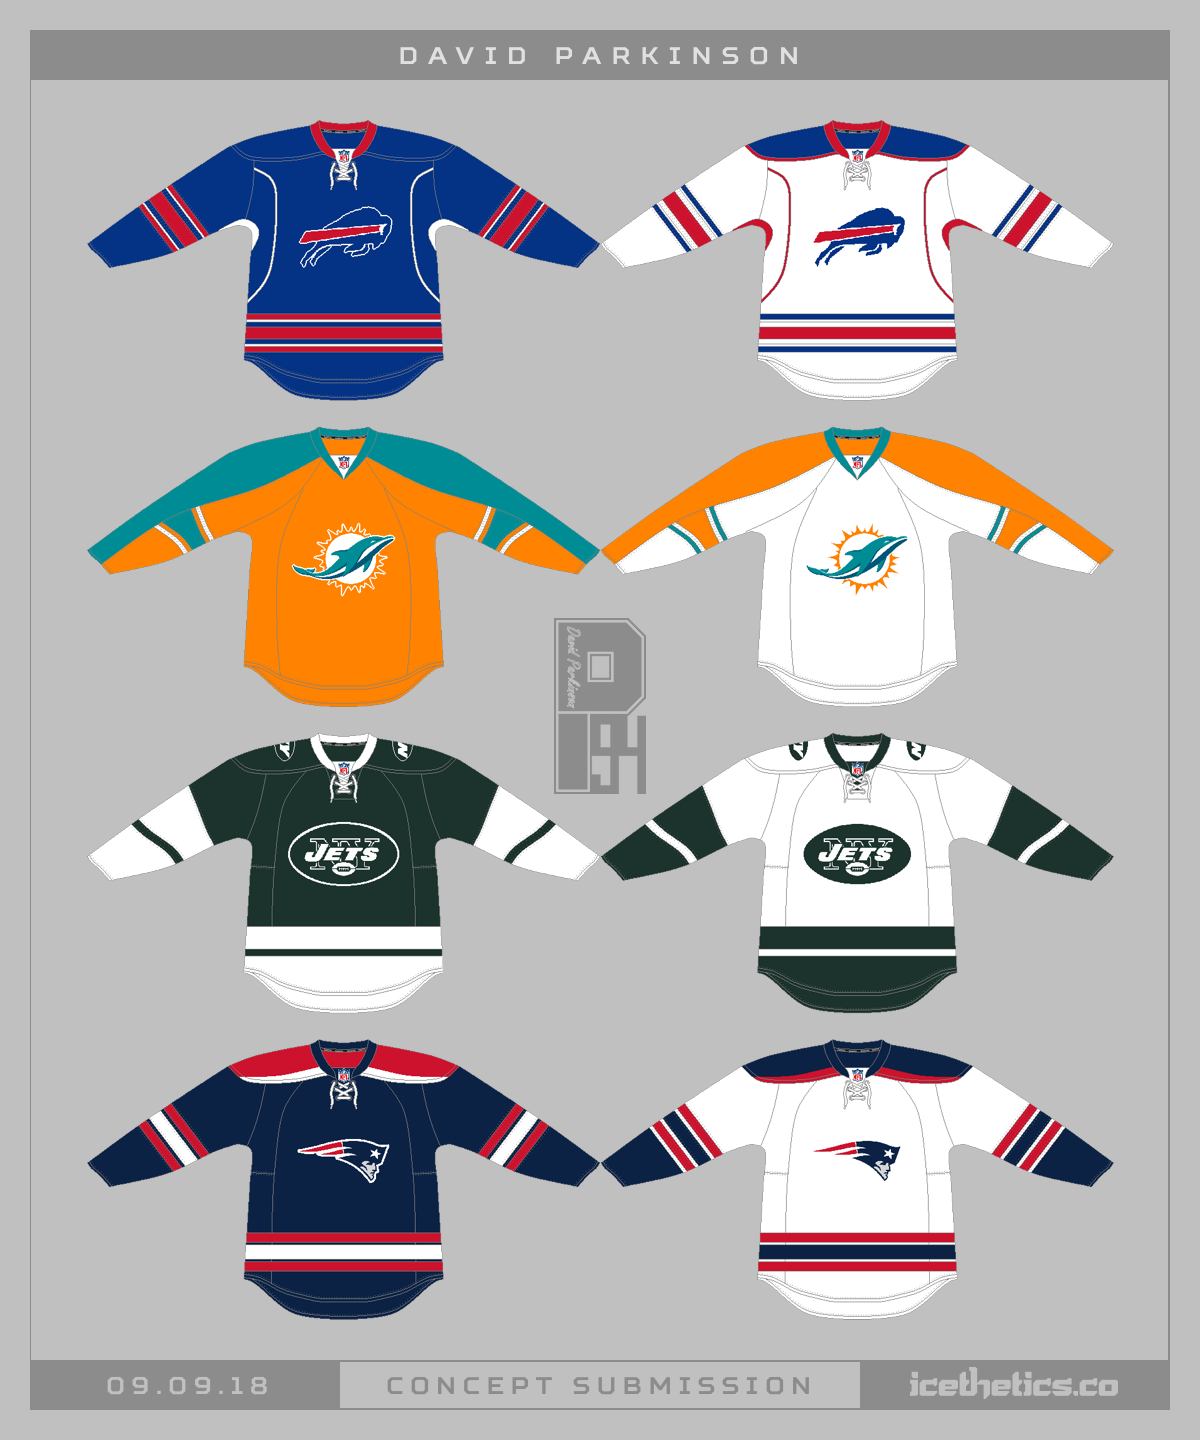 Designer Creats NHL/NFL Uniform Mashups For Every Hockey Team